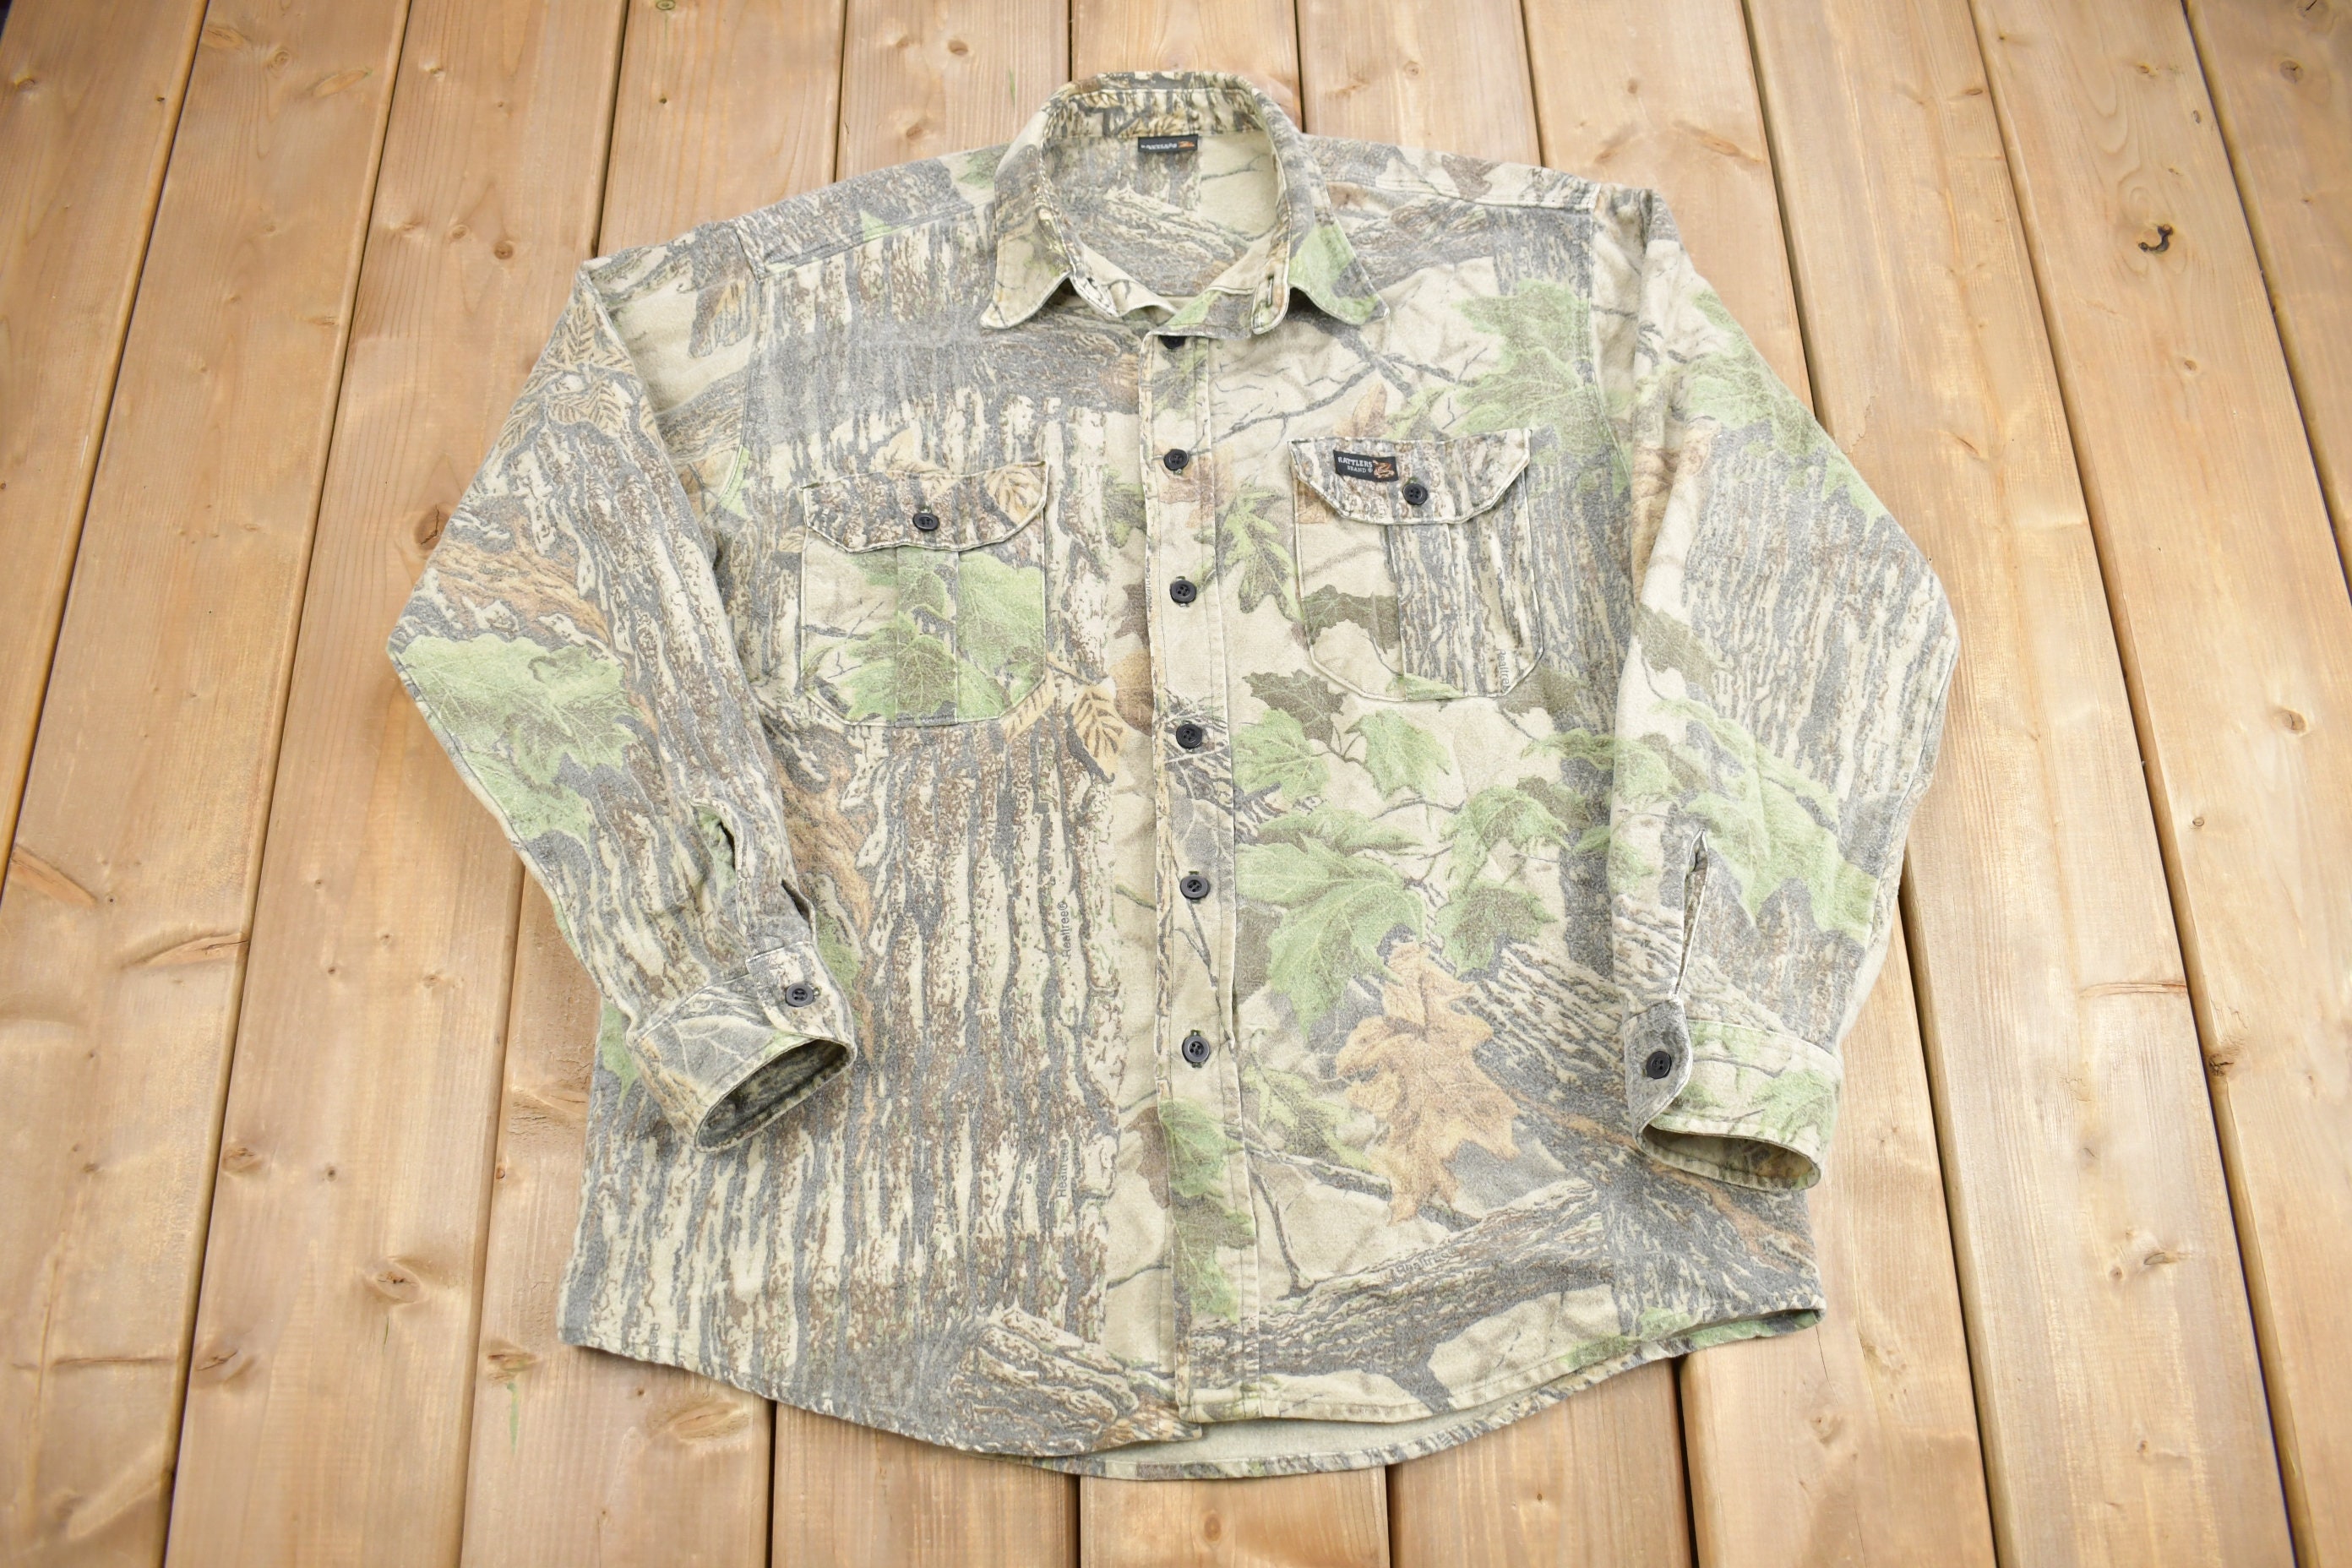 VTG Rattlers Brand Shirt Men's Camo Cotton Hunting Realtree